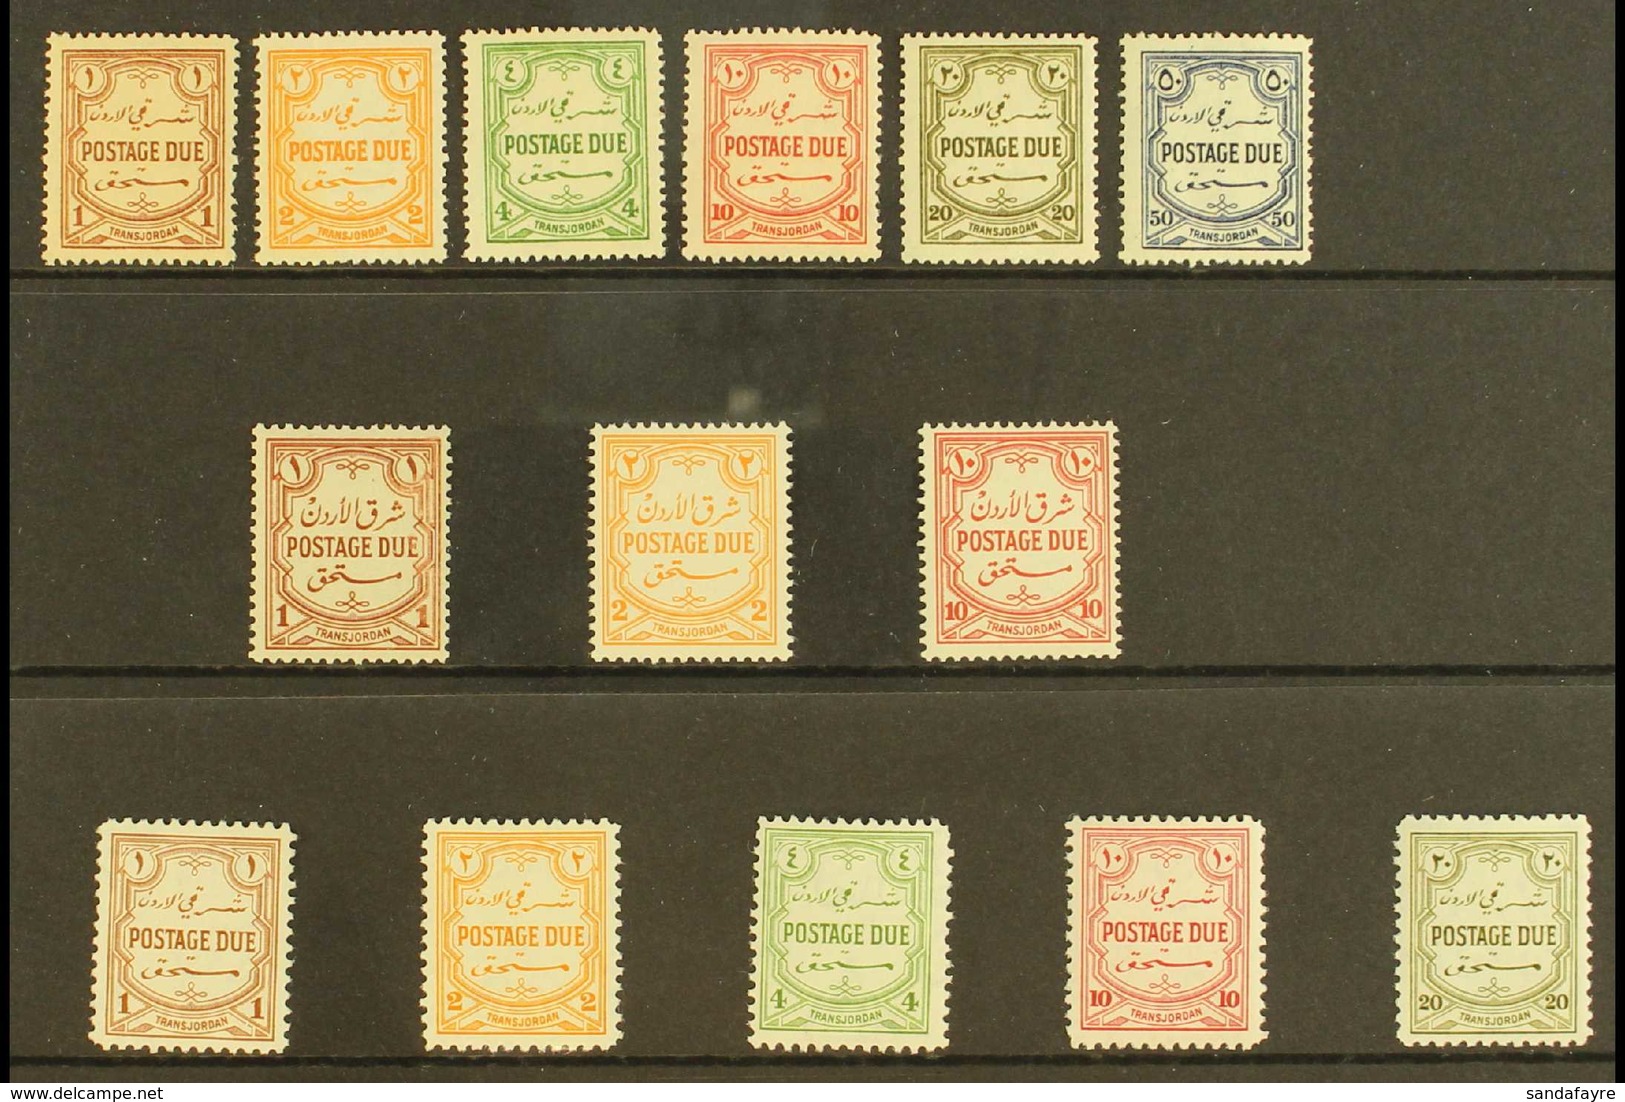 POSTAGE DUE 1929-49 MINT COLLECTION. A Complete Run From 1929-49, SG D189/94, SG D230/32 & SG D244/48, A Fine Mint Group - Jordanien